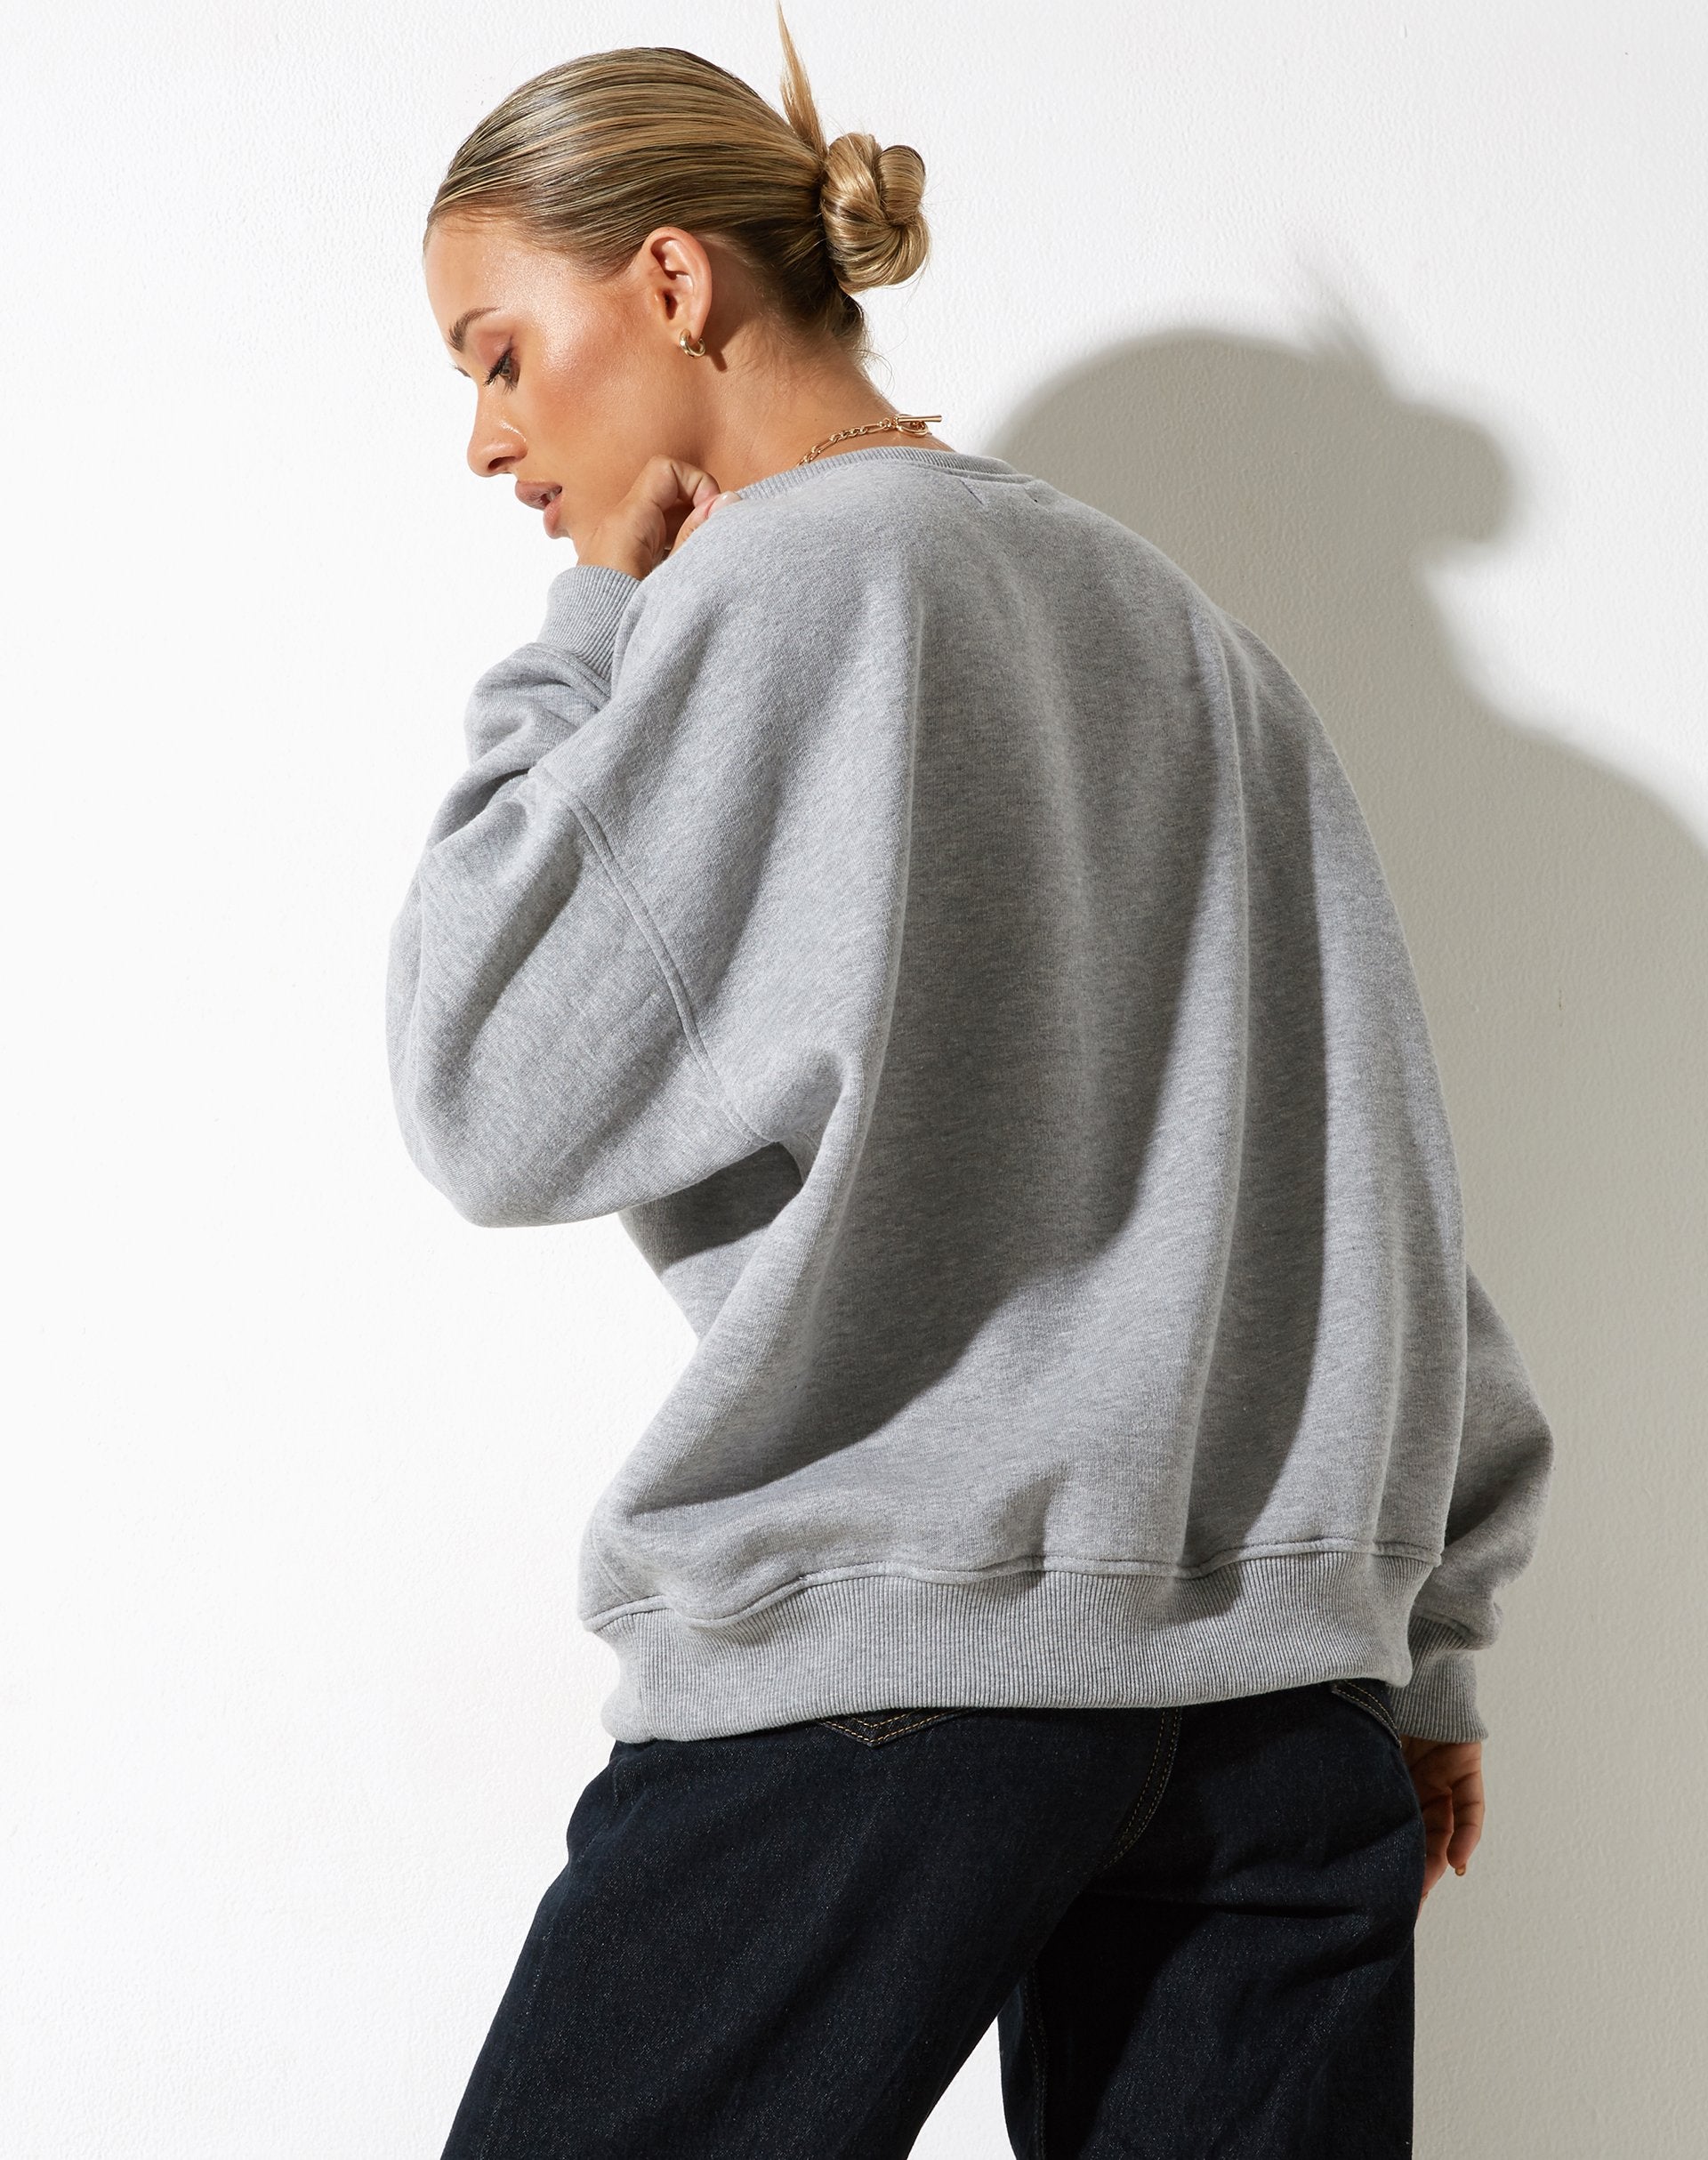 image of Glan Sweatshirt in Grey Marl with "M Classics" Embro